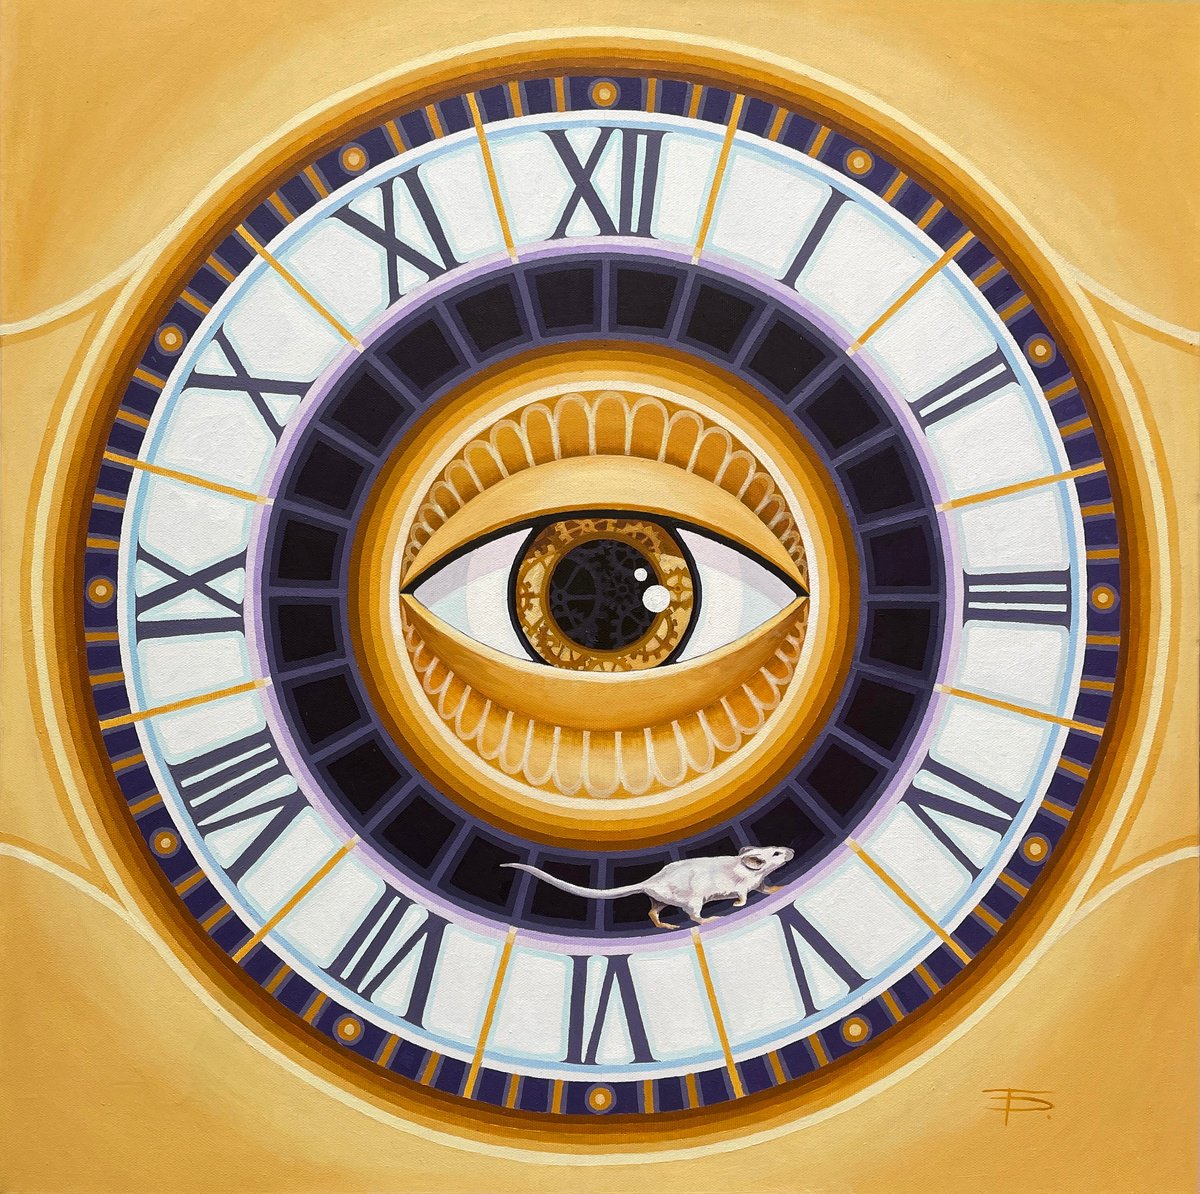 The time observer by Diana Titova